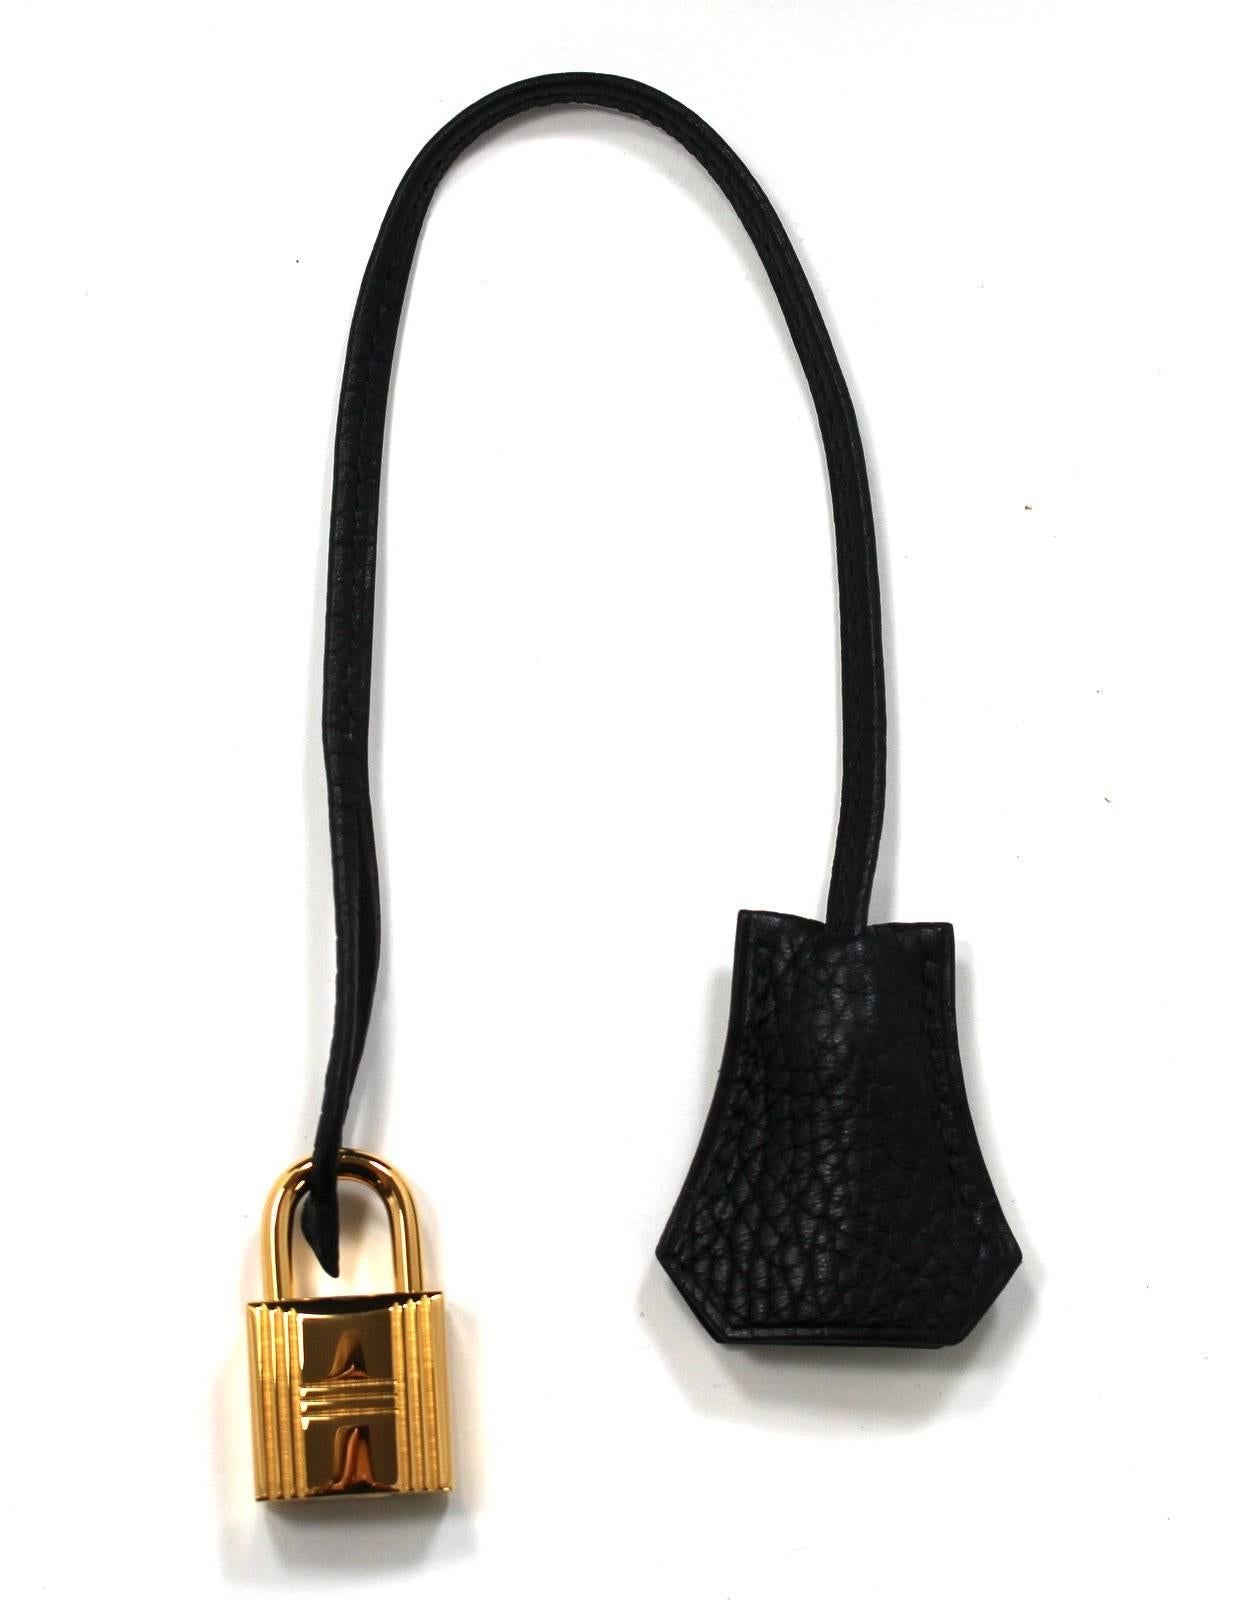 Hermès 35 cm Birkin Bag in BLACK Togo Leather with Gold 3